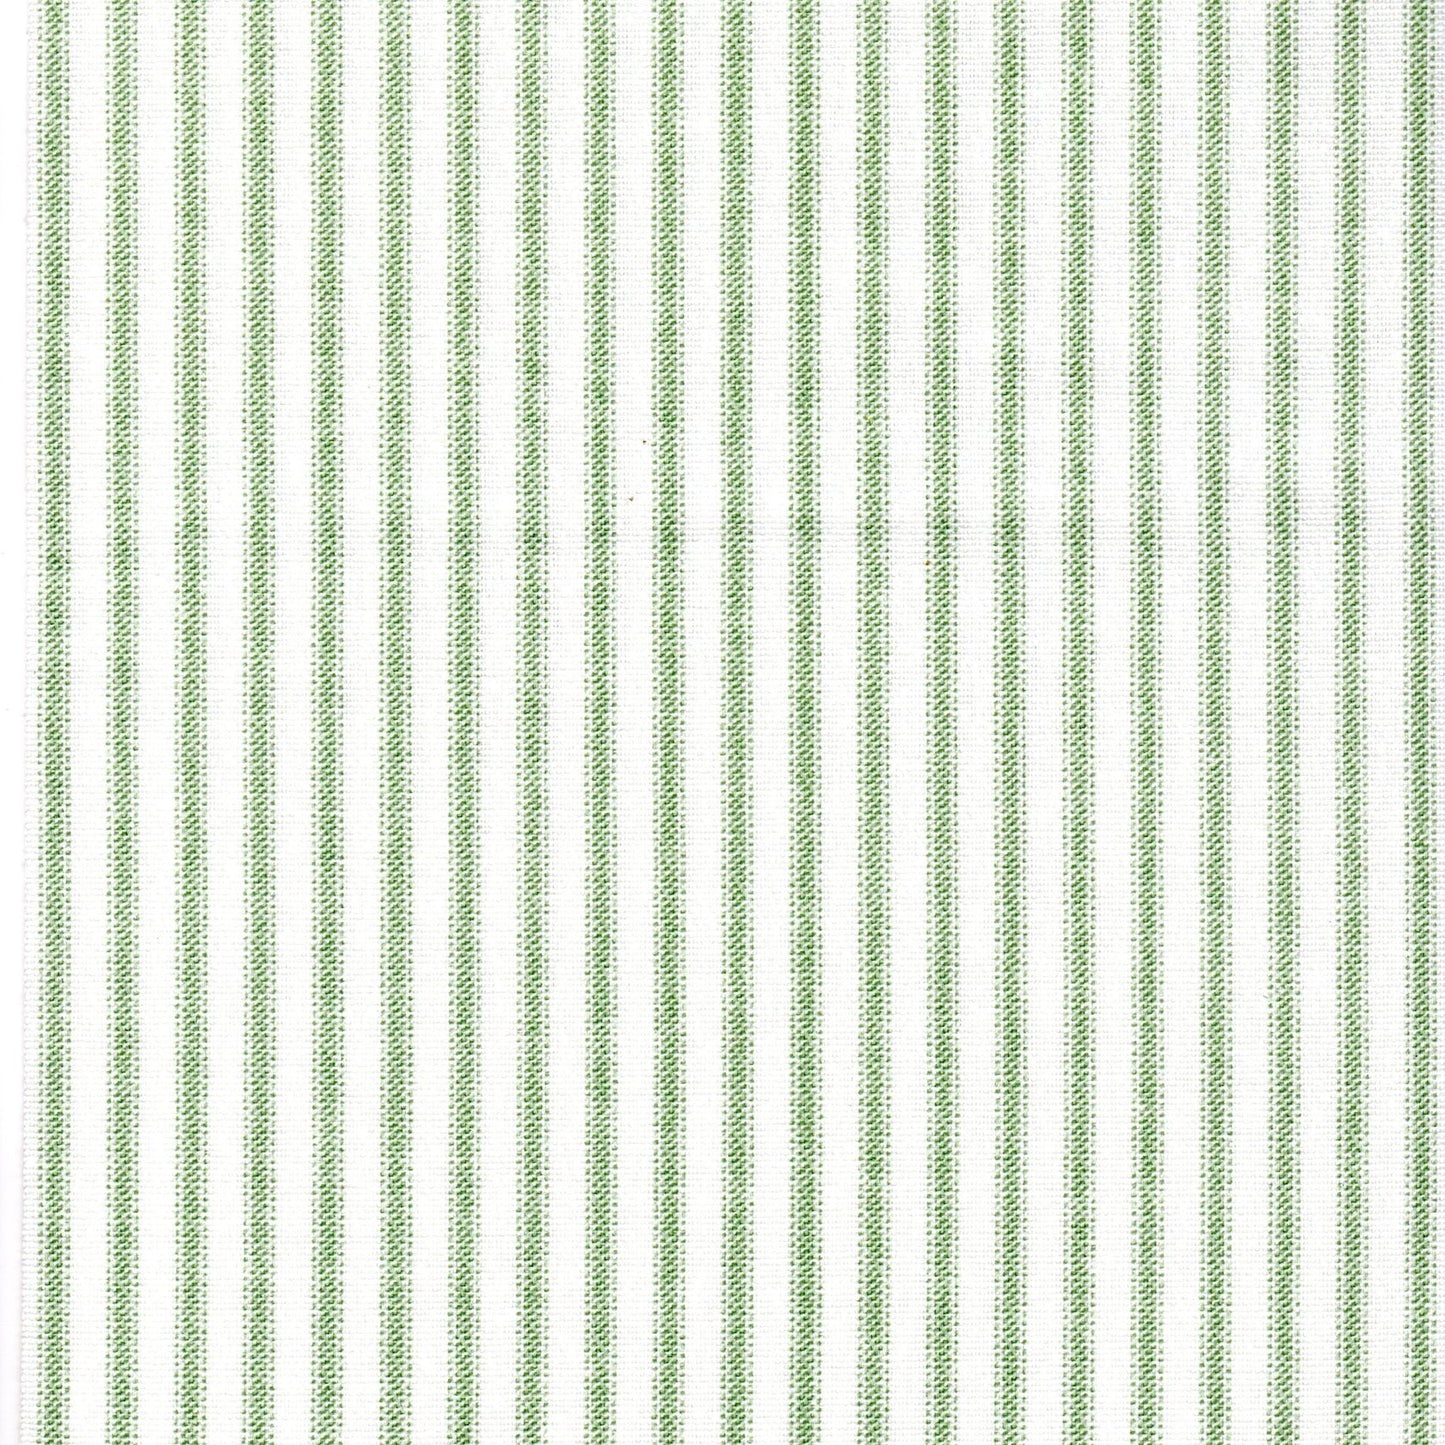 pillow sham in Classic Sage Green Ticking Stripe on White